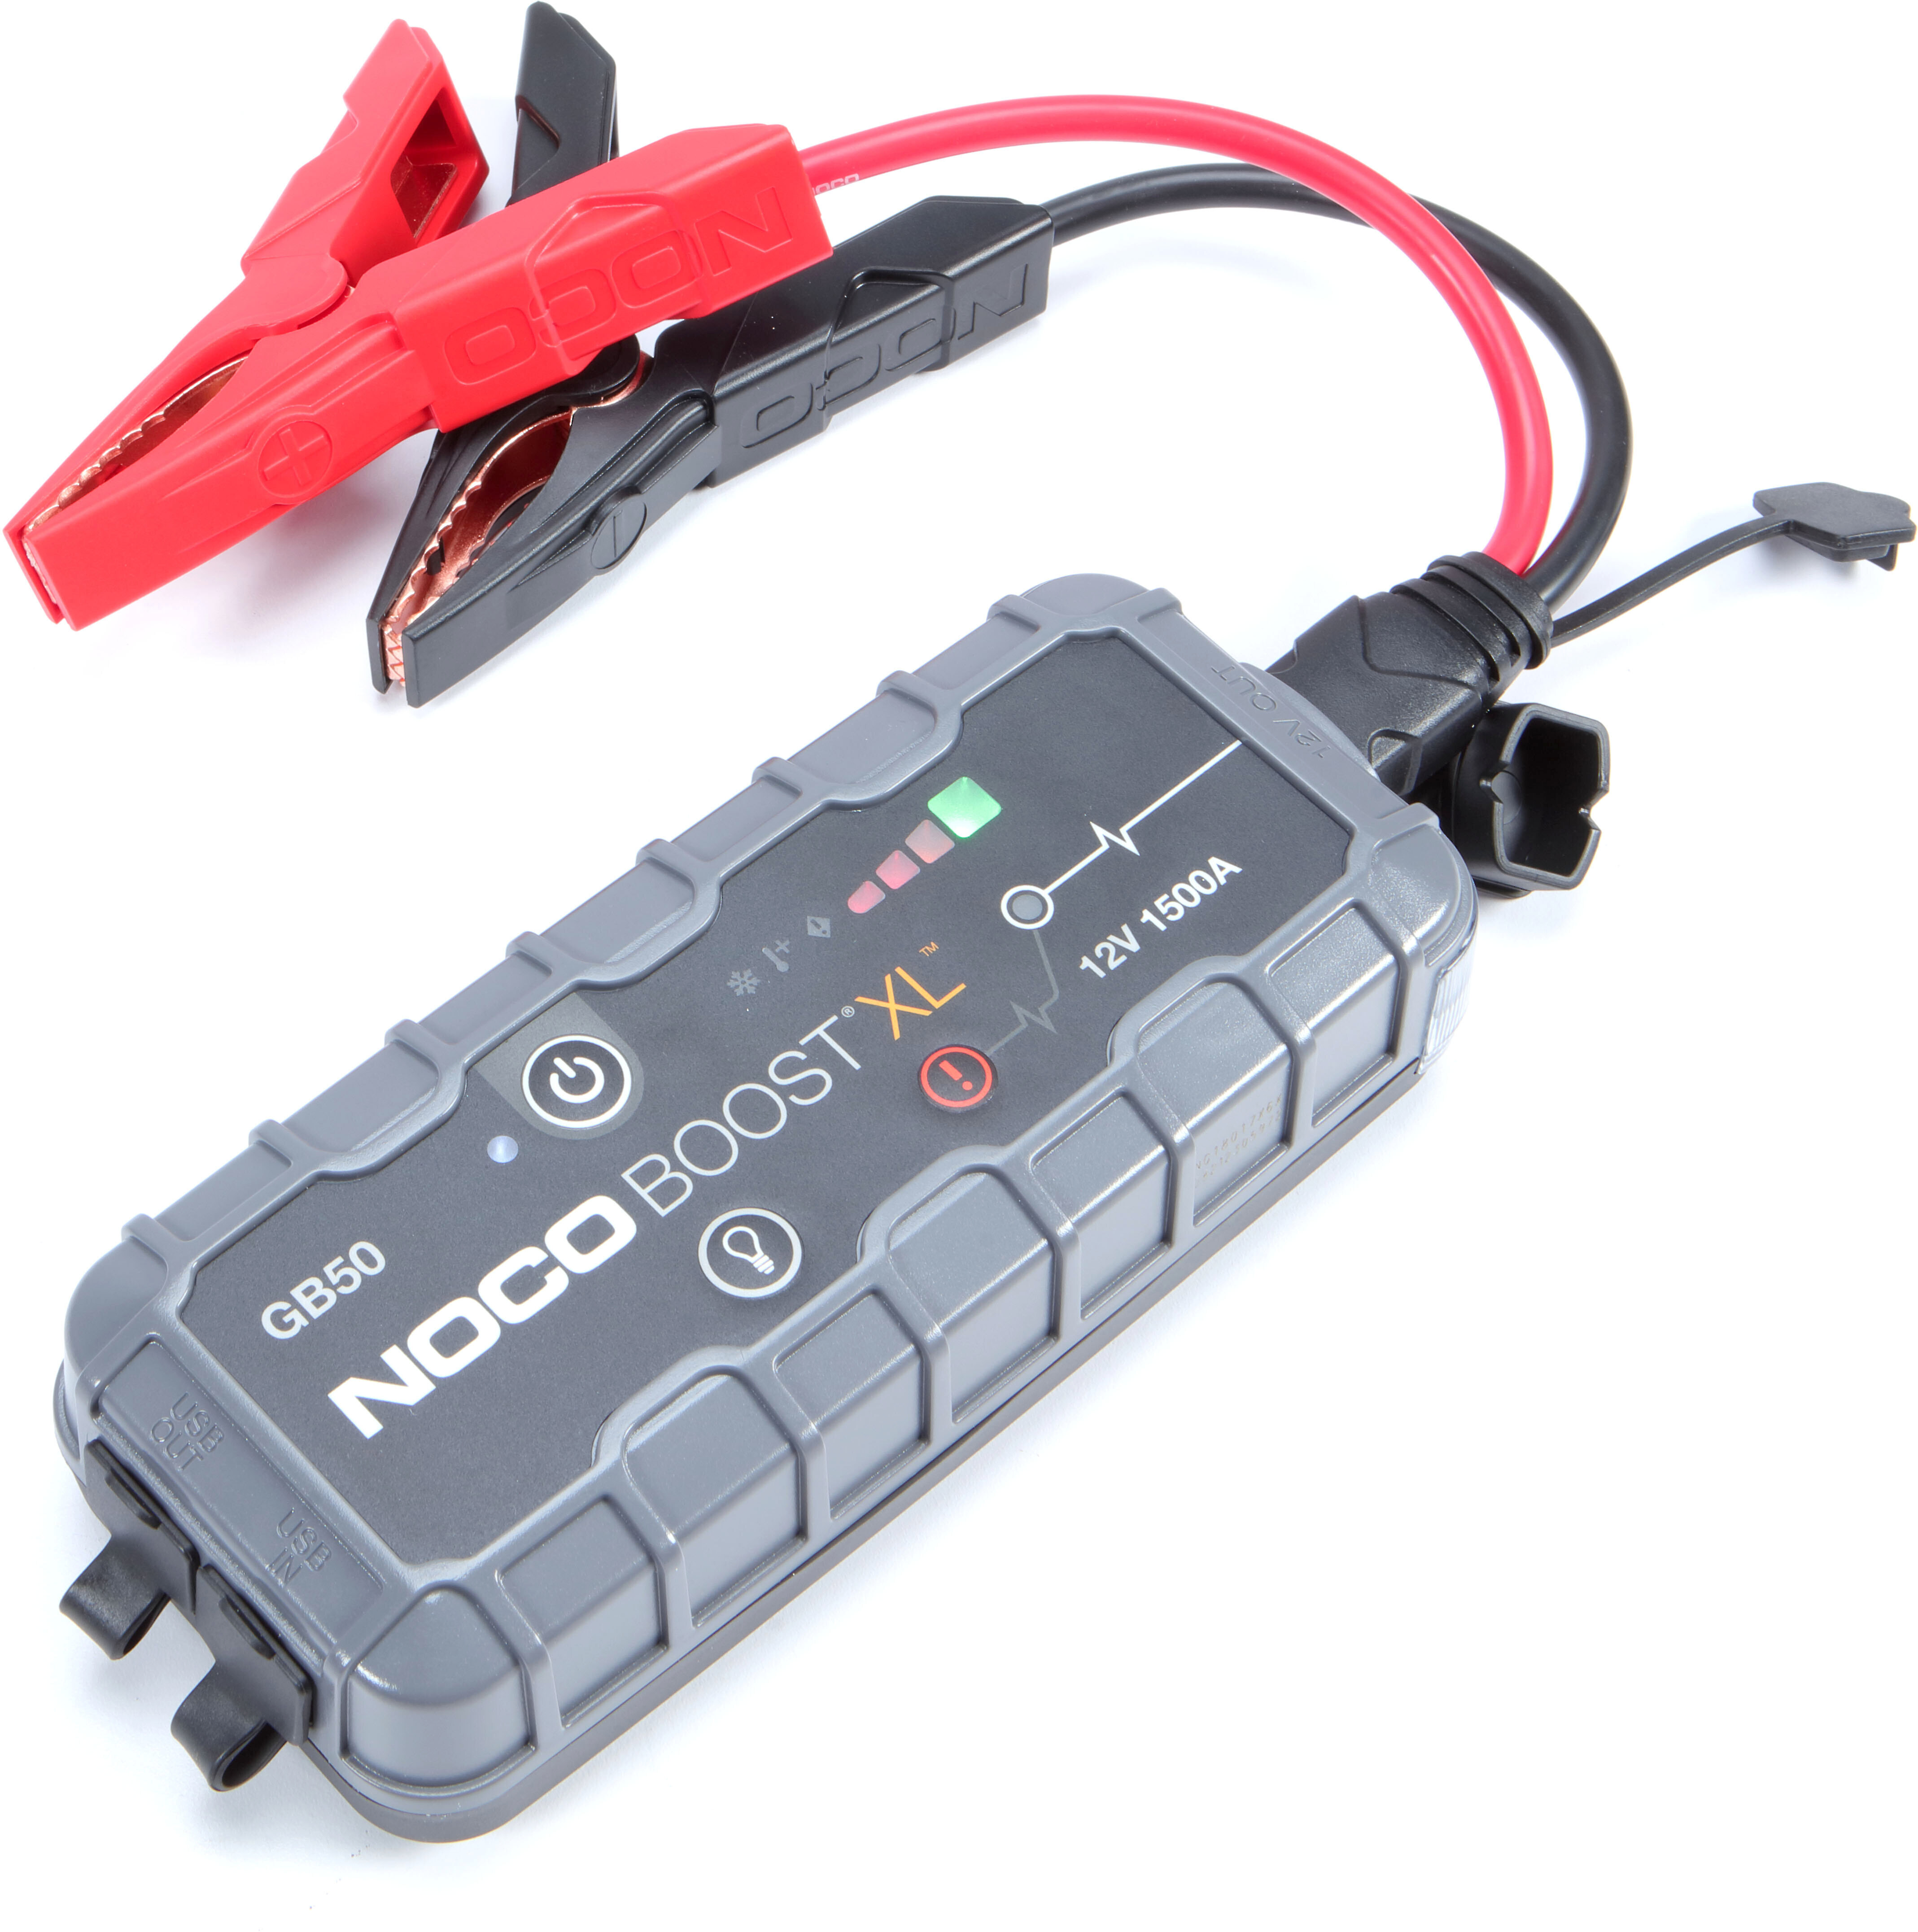 NOCO Genius Boost Plus 1500 Amp UltraSafe Jump Starter & Power Pack USB Ports Worklight, GB50